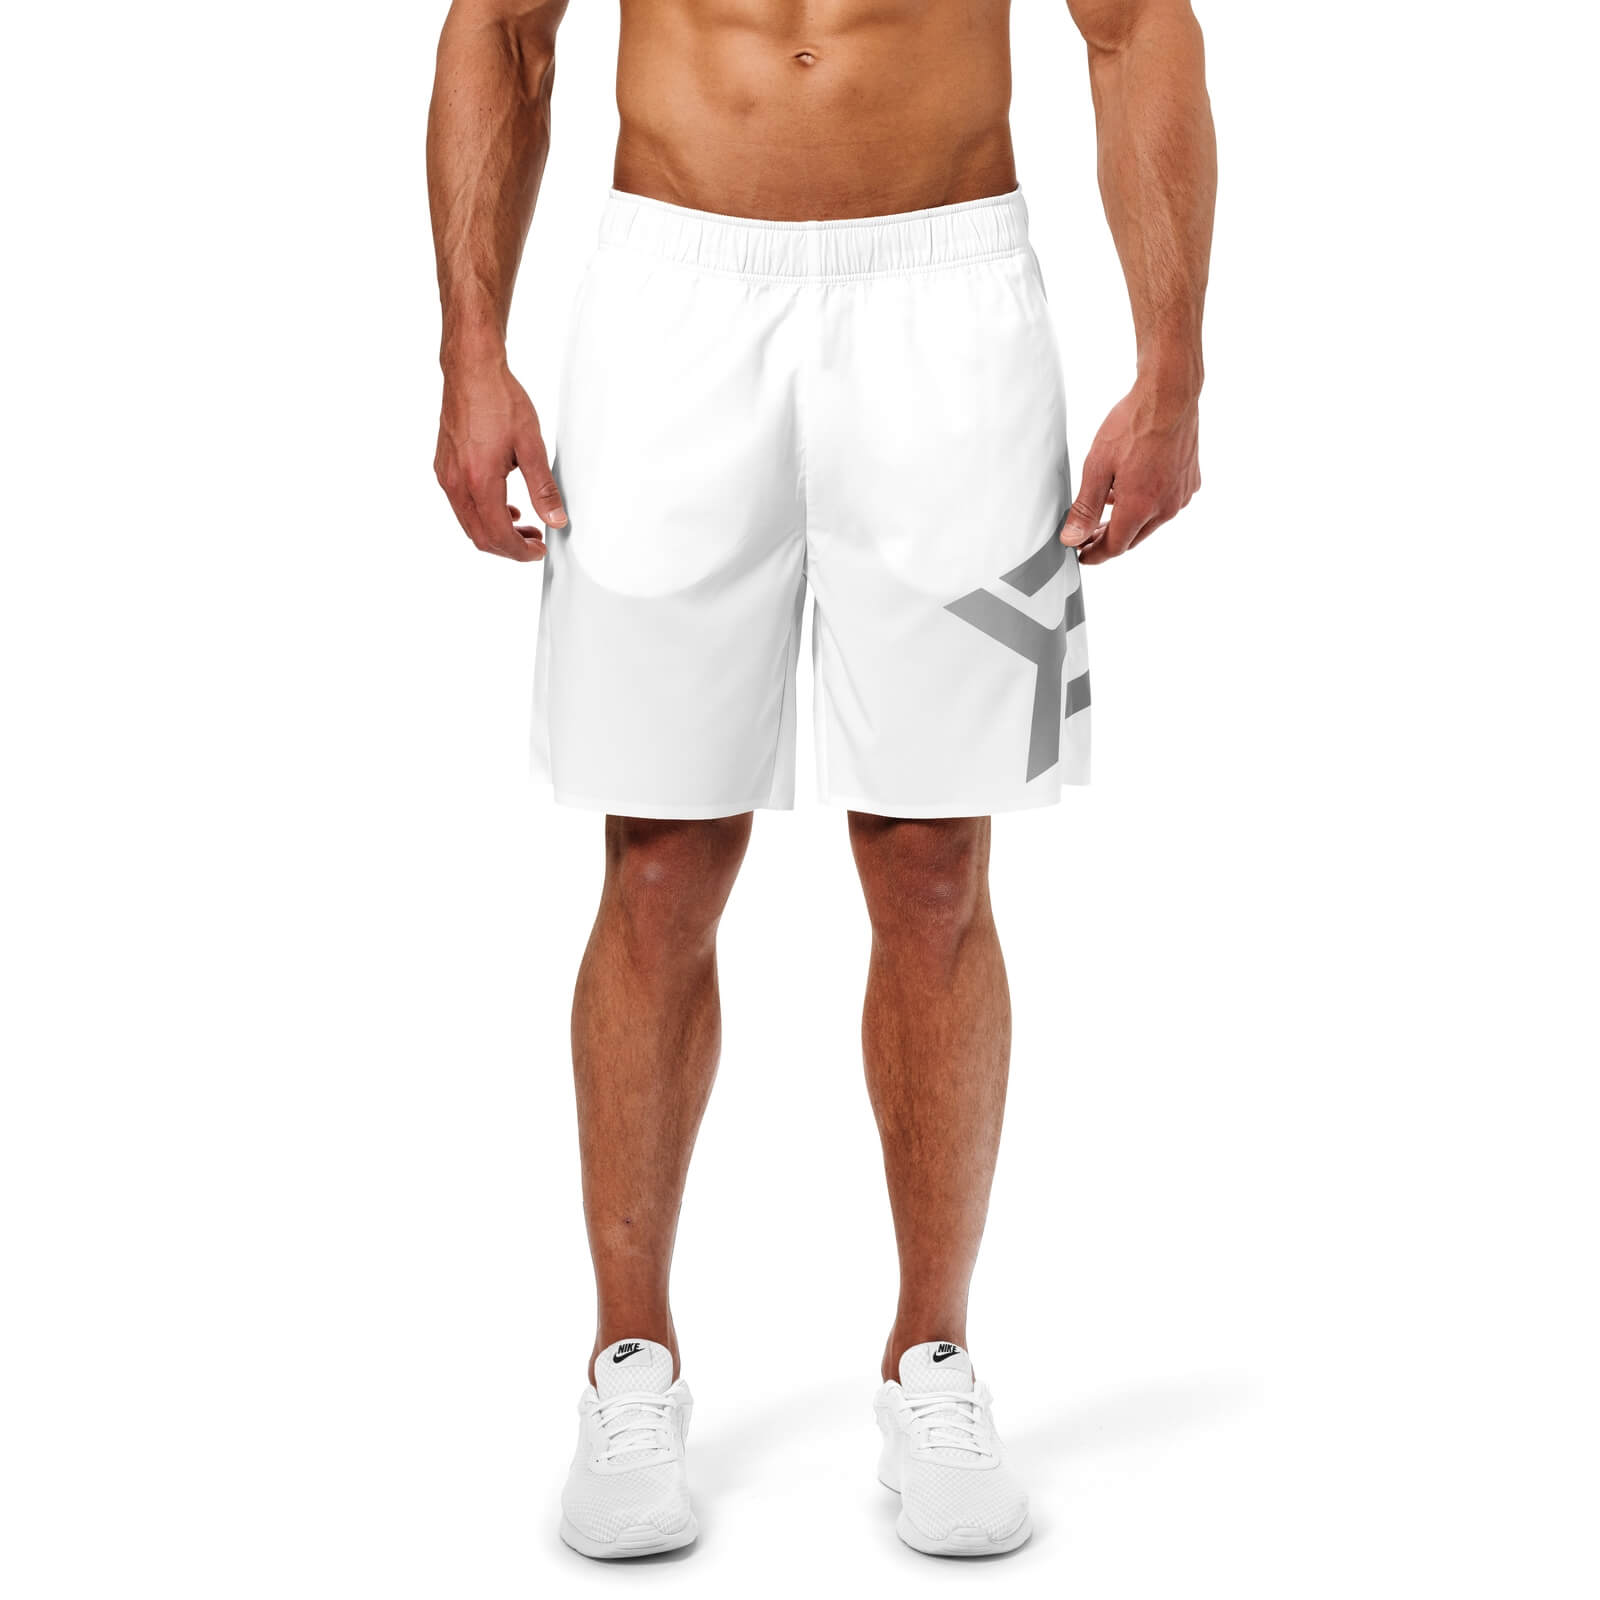 Kolla in Hamilton Shorts, white, Better Bodies hos SportGymButiken.se